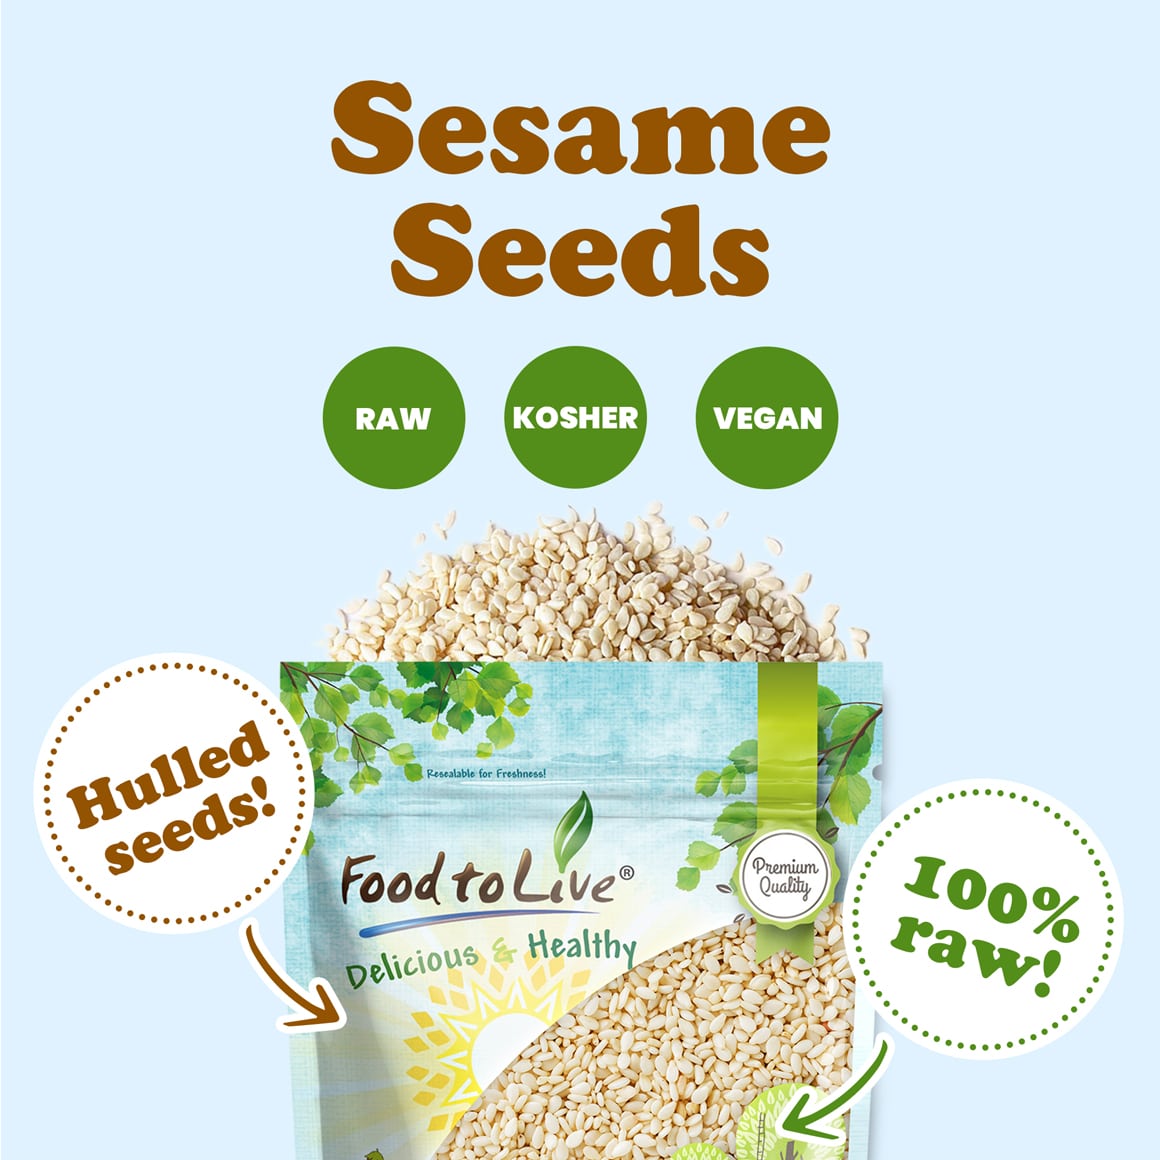 Food to Live Sesame Seeds (hulled, Kosher) (1 pound)